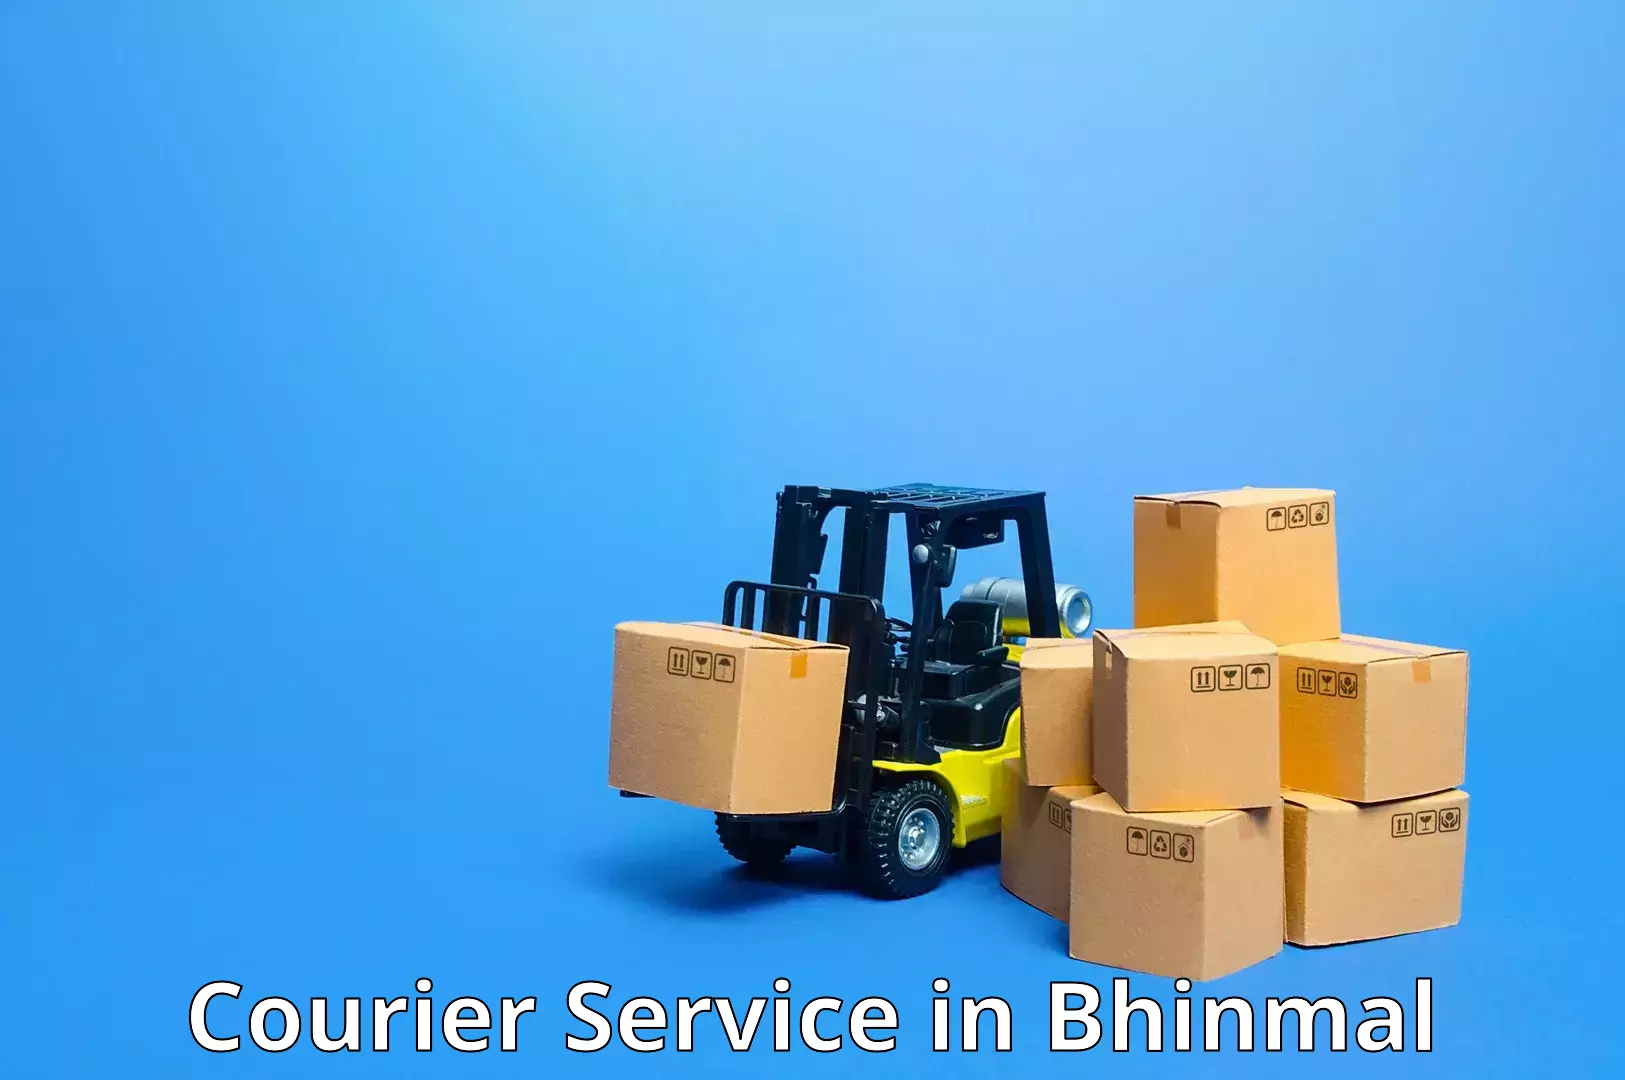 Customer-centric shipping in Bhinmal